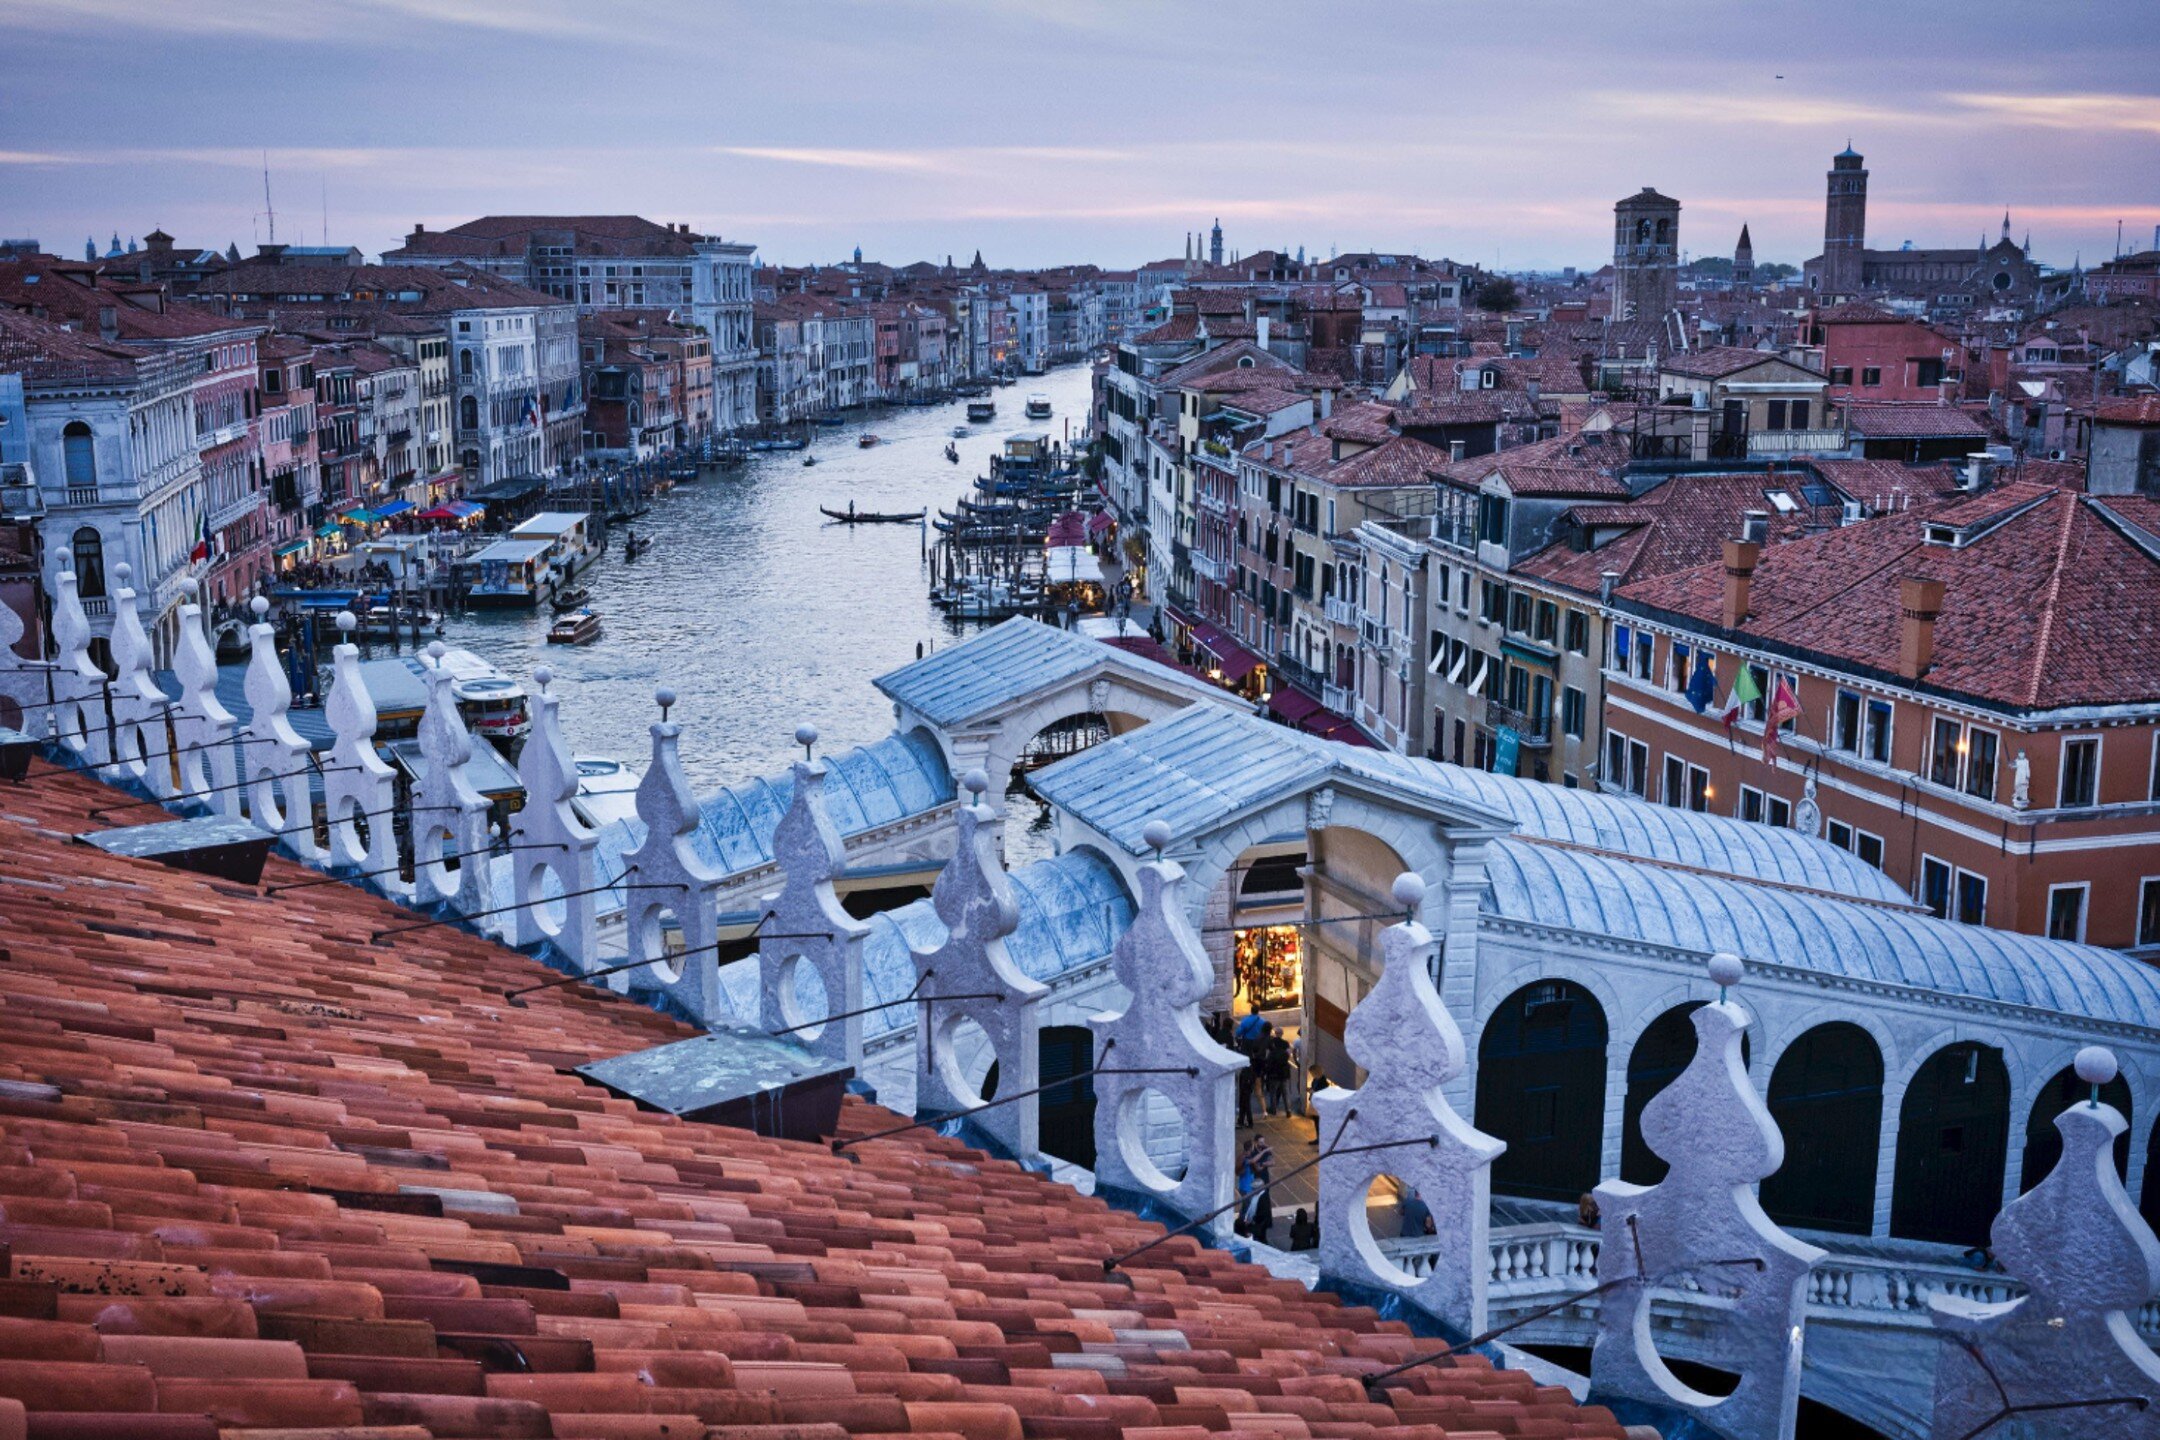 A serene view from Fondaco dei Tedeschi over Rialto Bridge and the Grand Canal....
#Venice